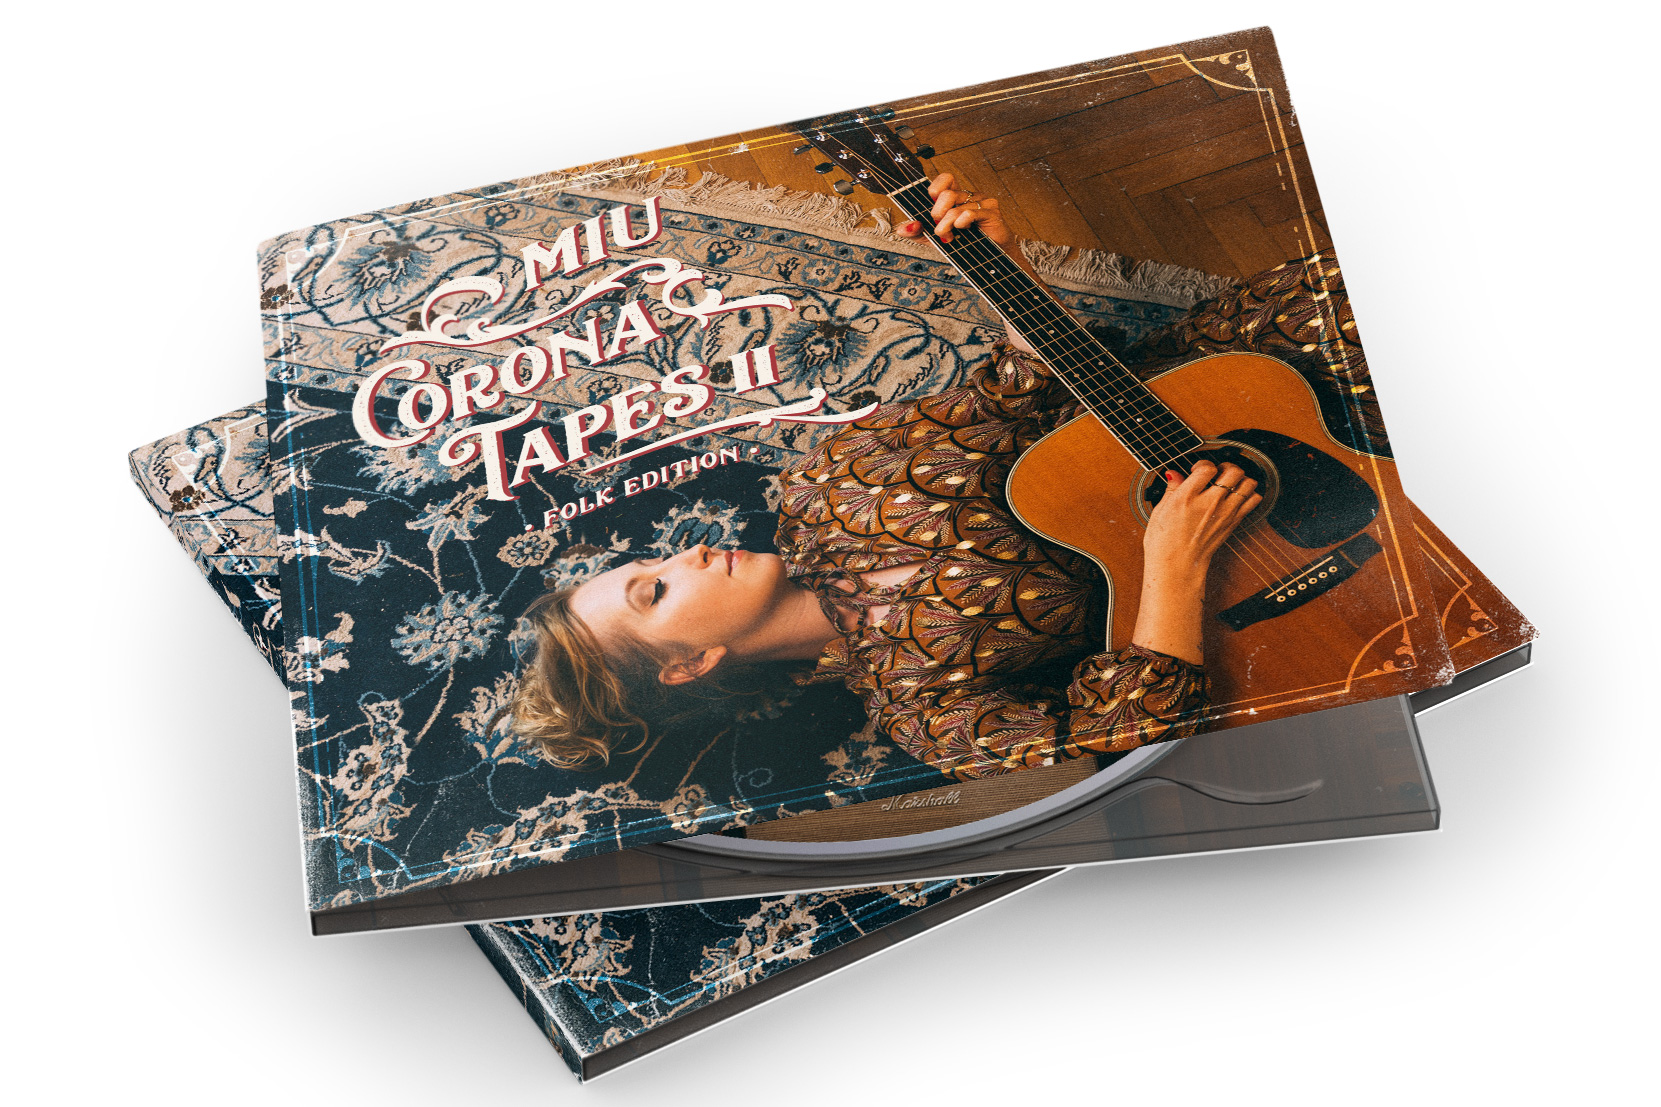 miu - Corona Tapes 'Folk Edition'